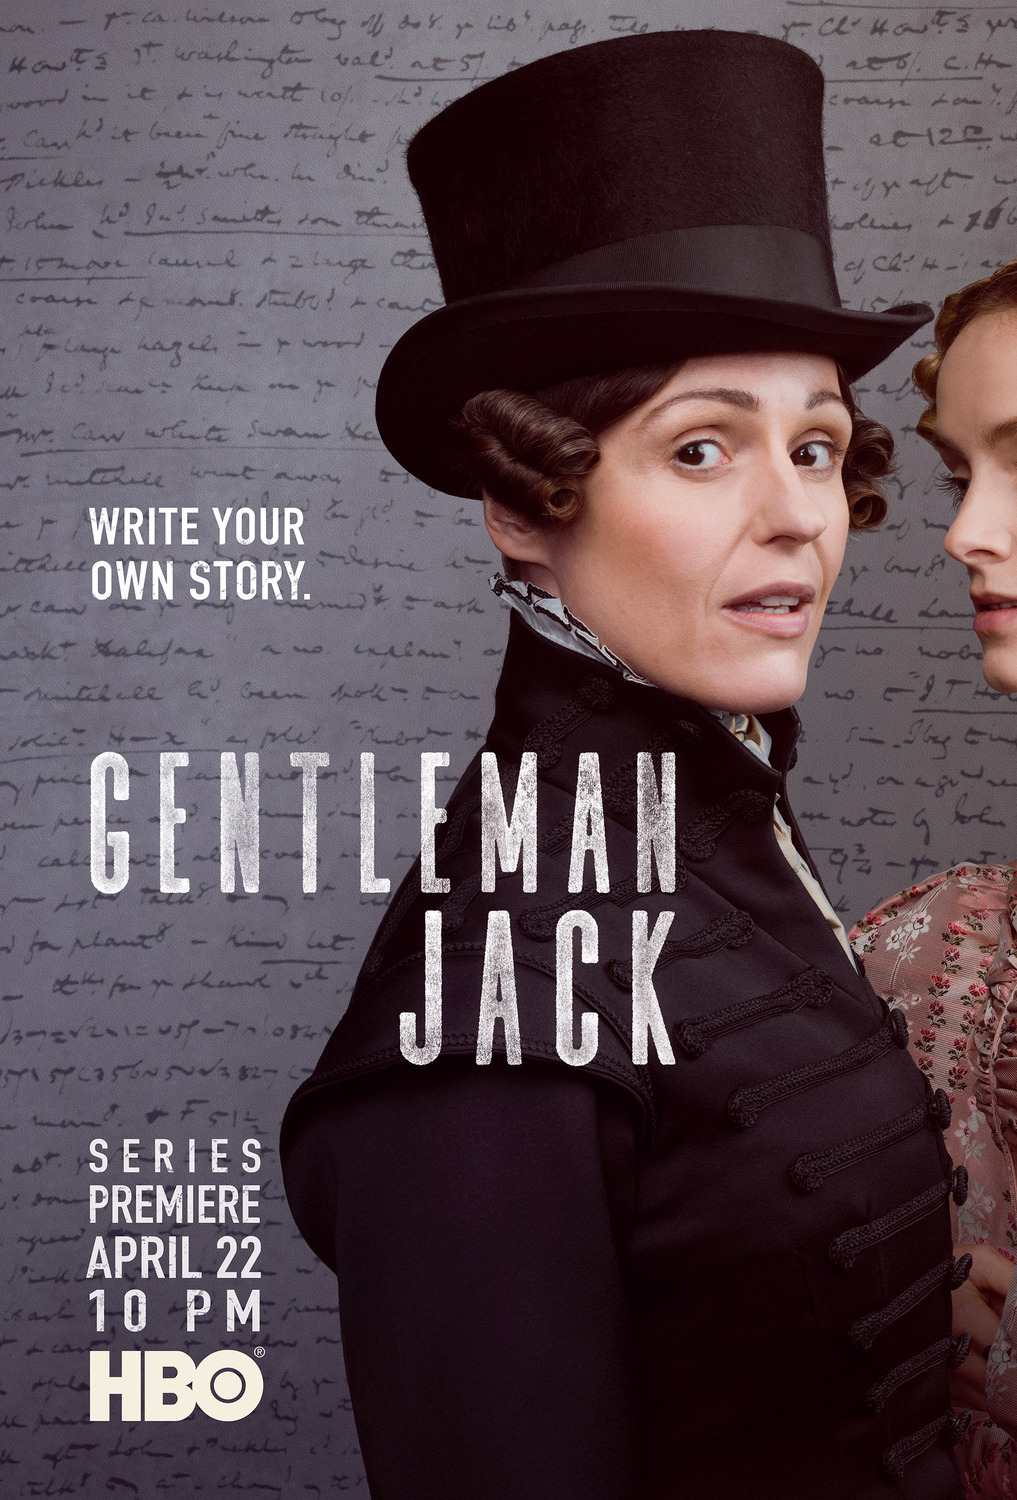 Extra Large TV Poster Image for Gentleman Jack 